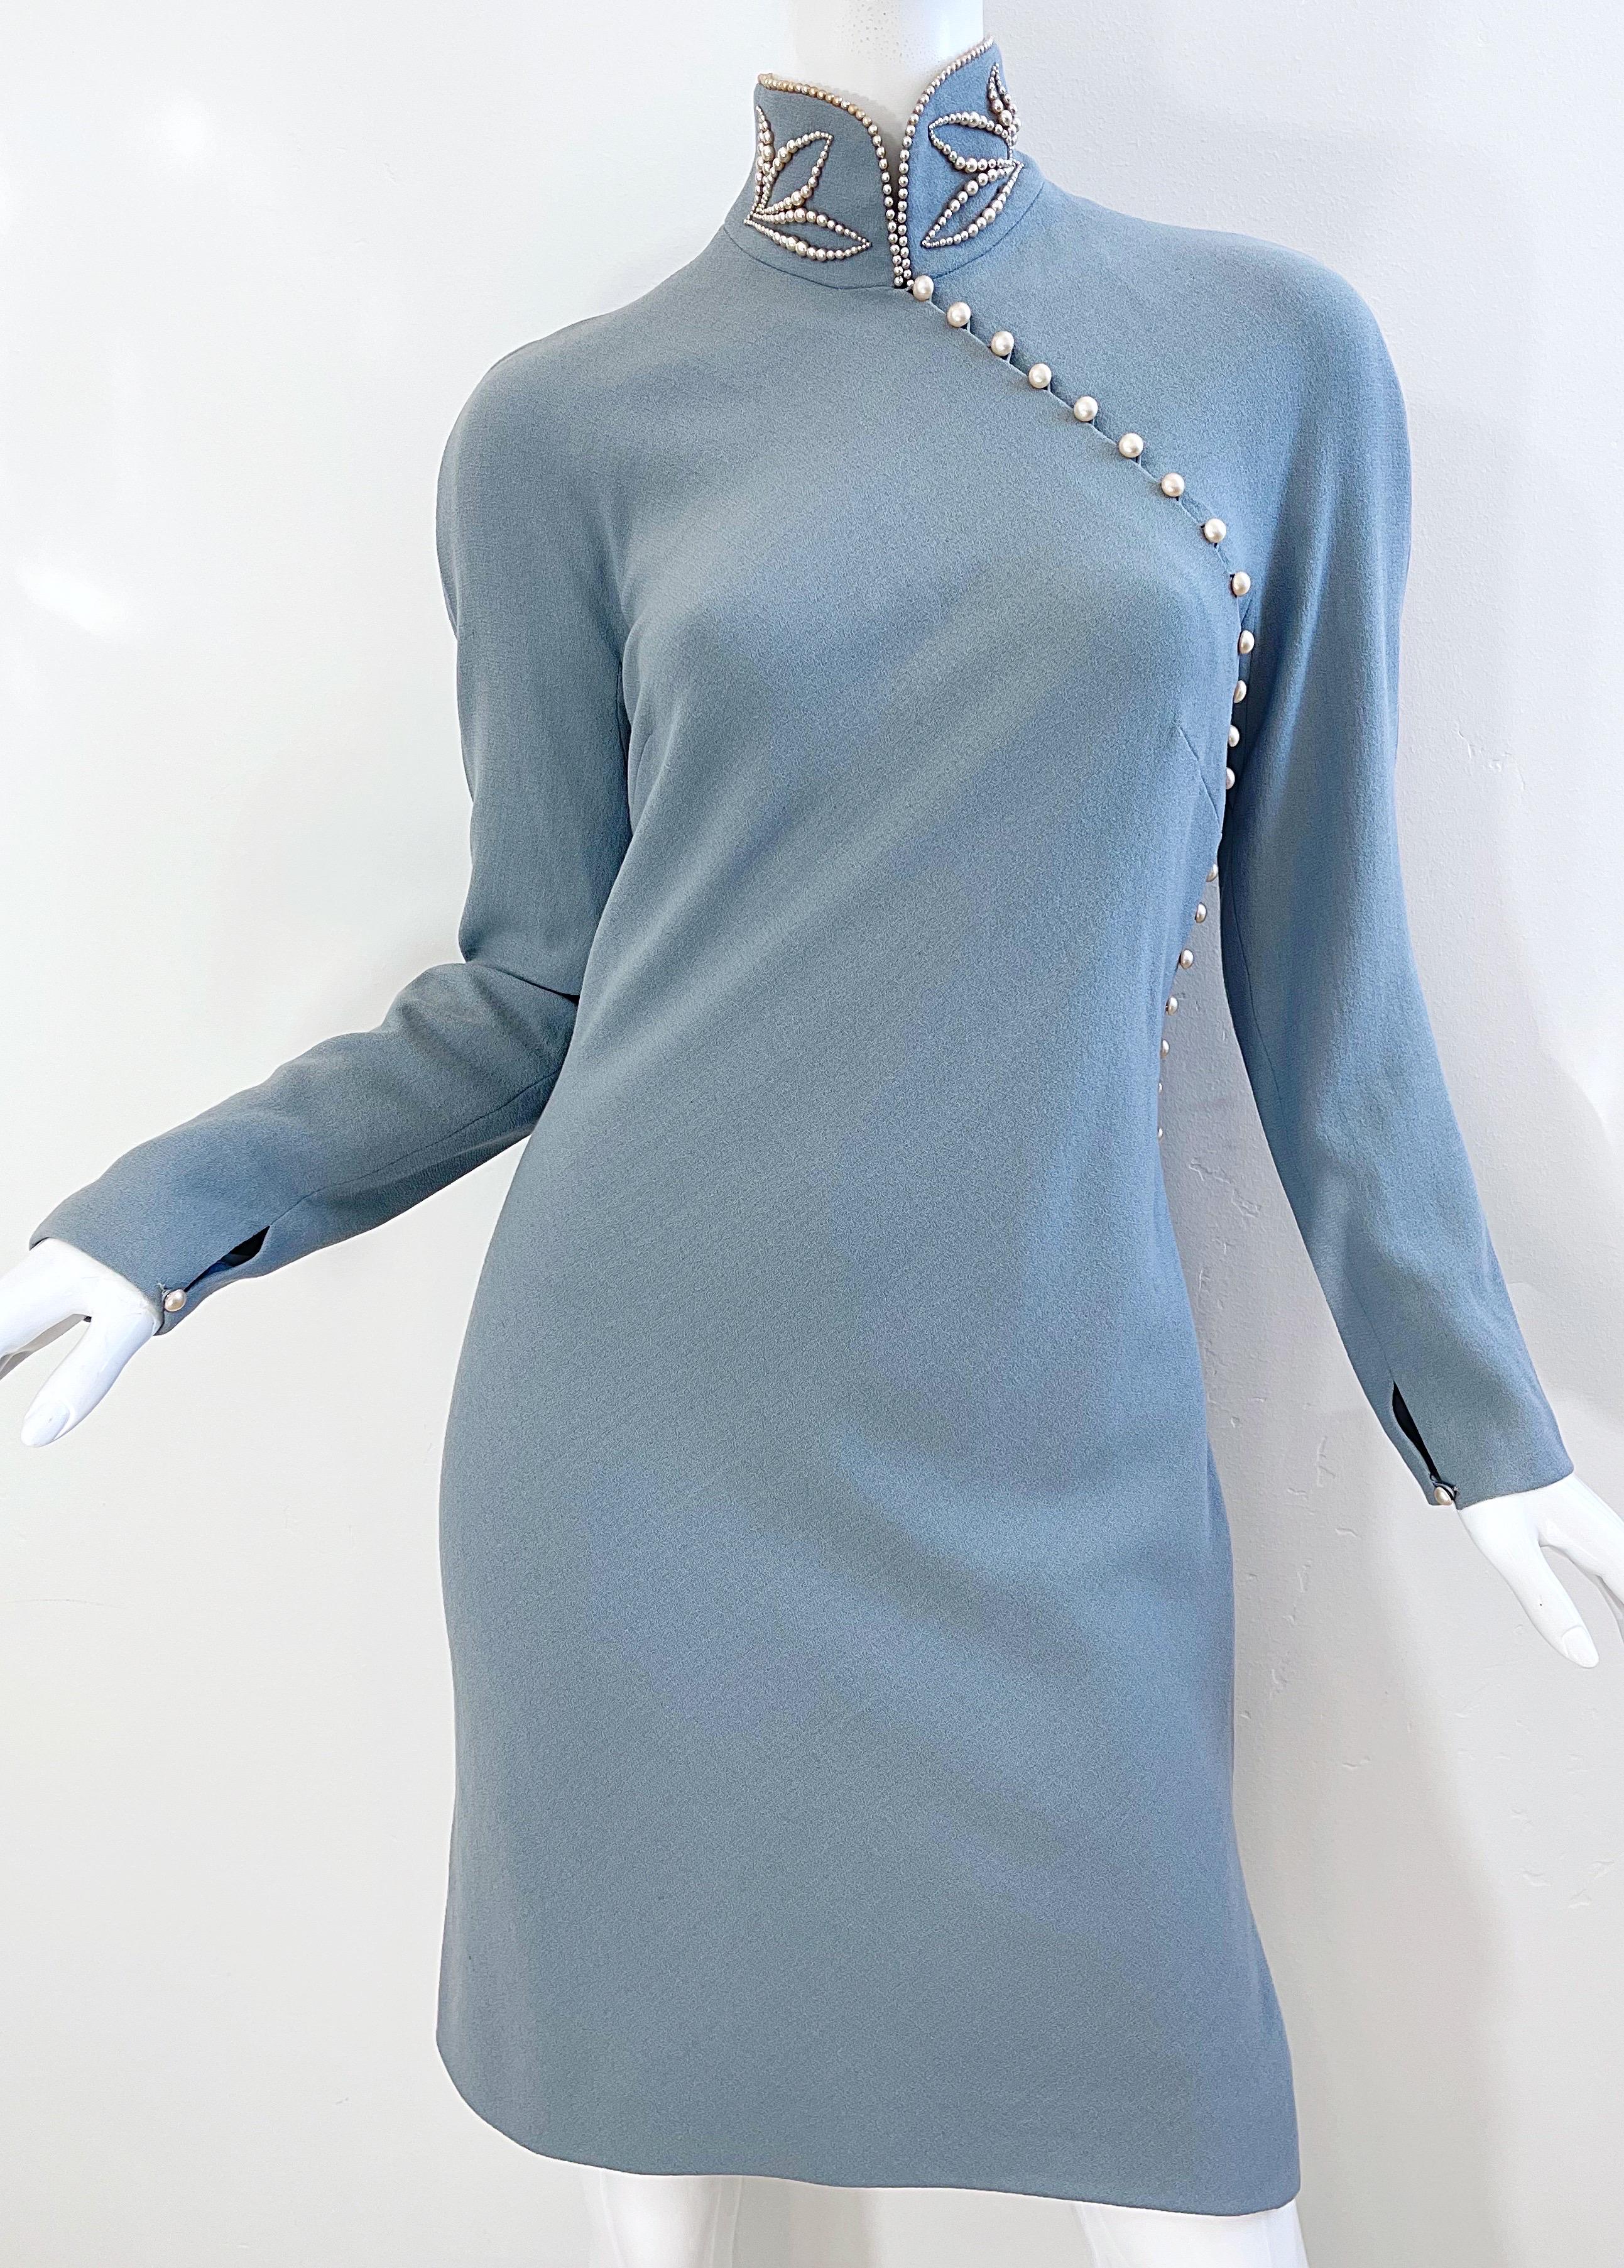 Documented Christian Dior by John Galliano AW 1997 Size 6 Blue Cheongsam Dress 1